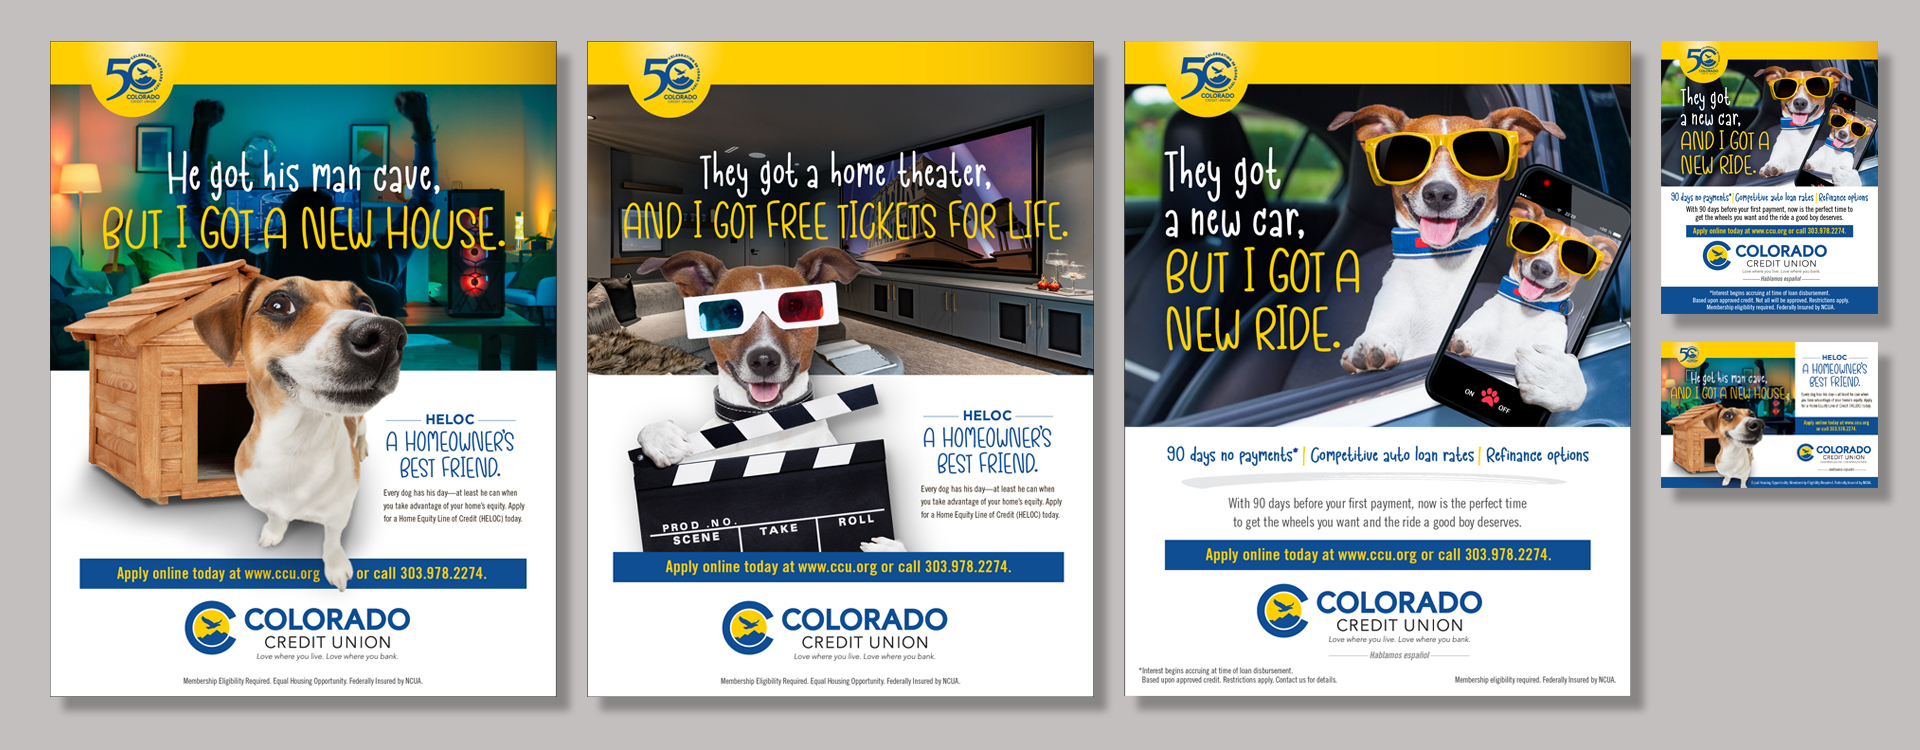 Colorado Credit Union marketing materials designed by AcrobatAnt.